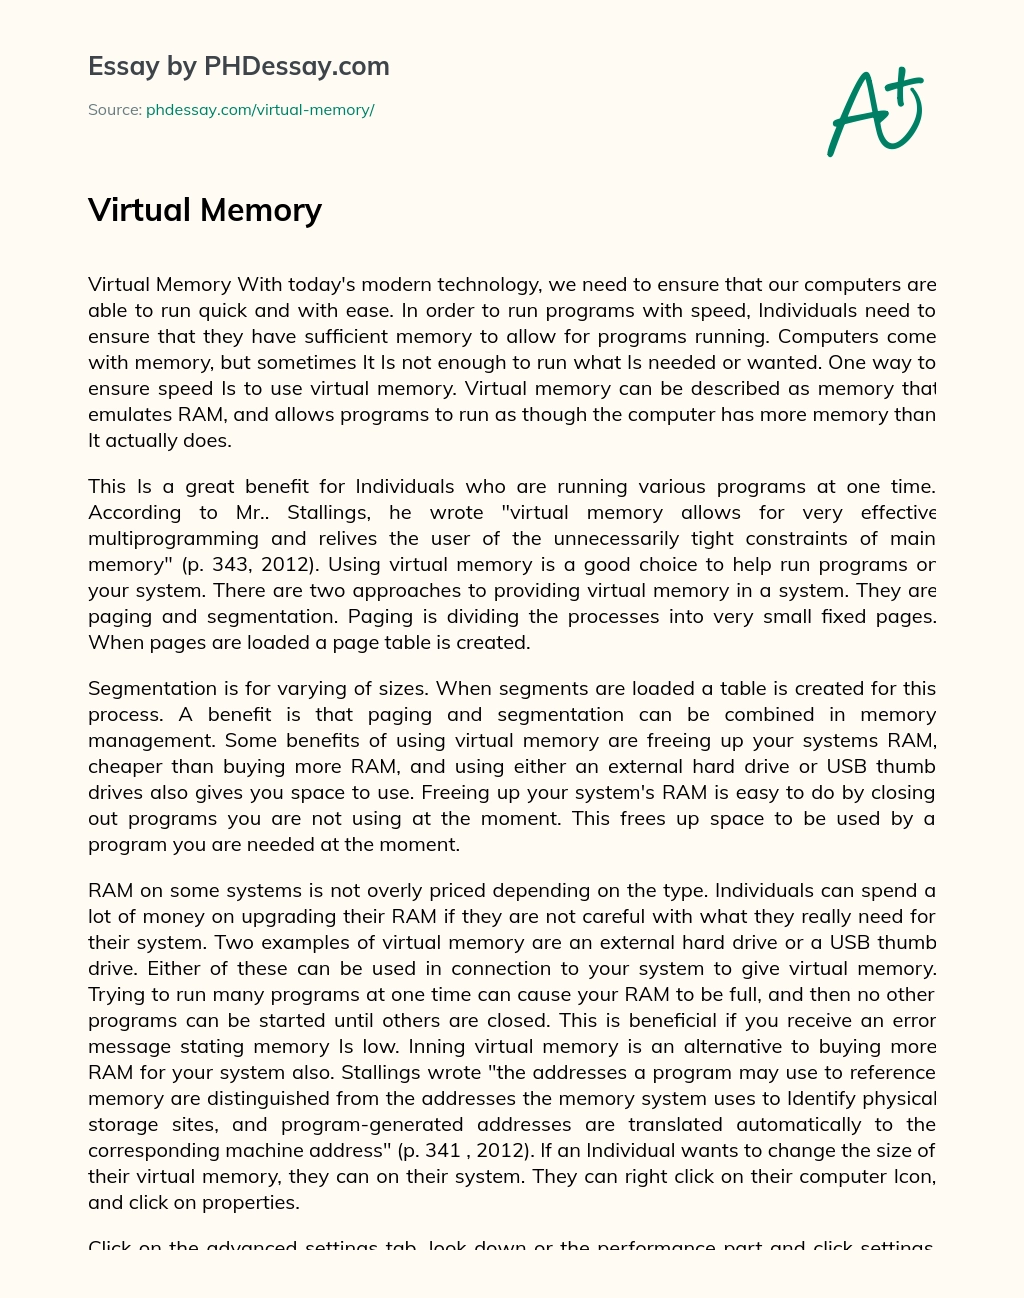 Virtual Memory essay